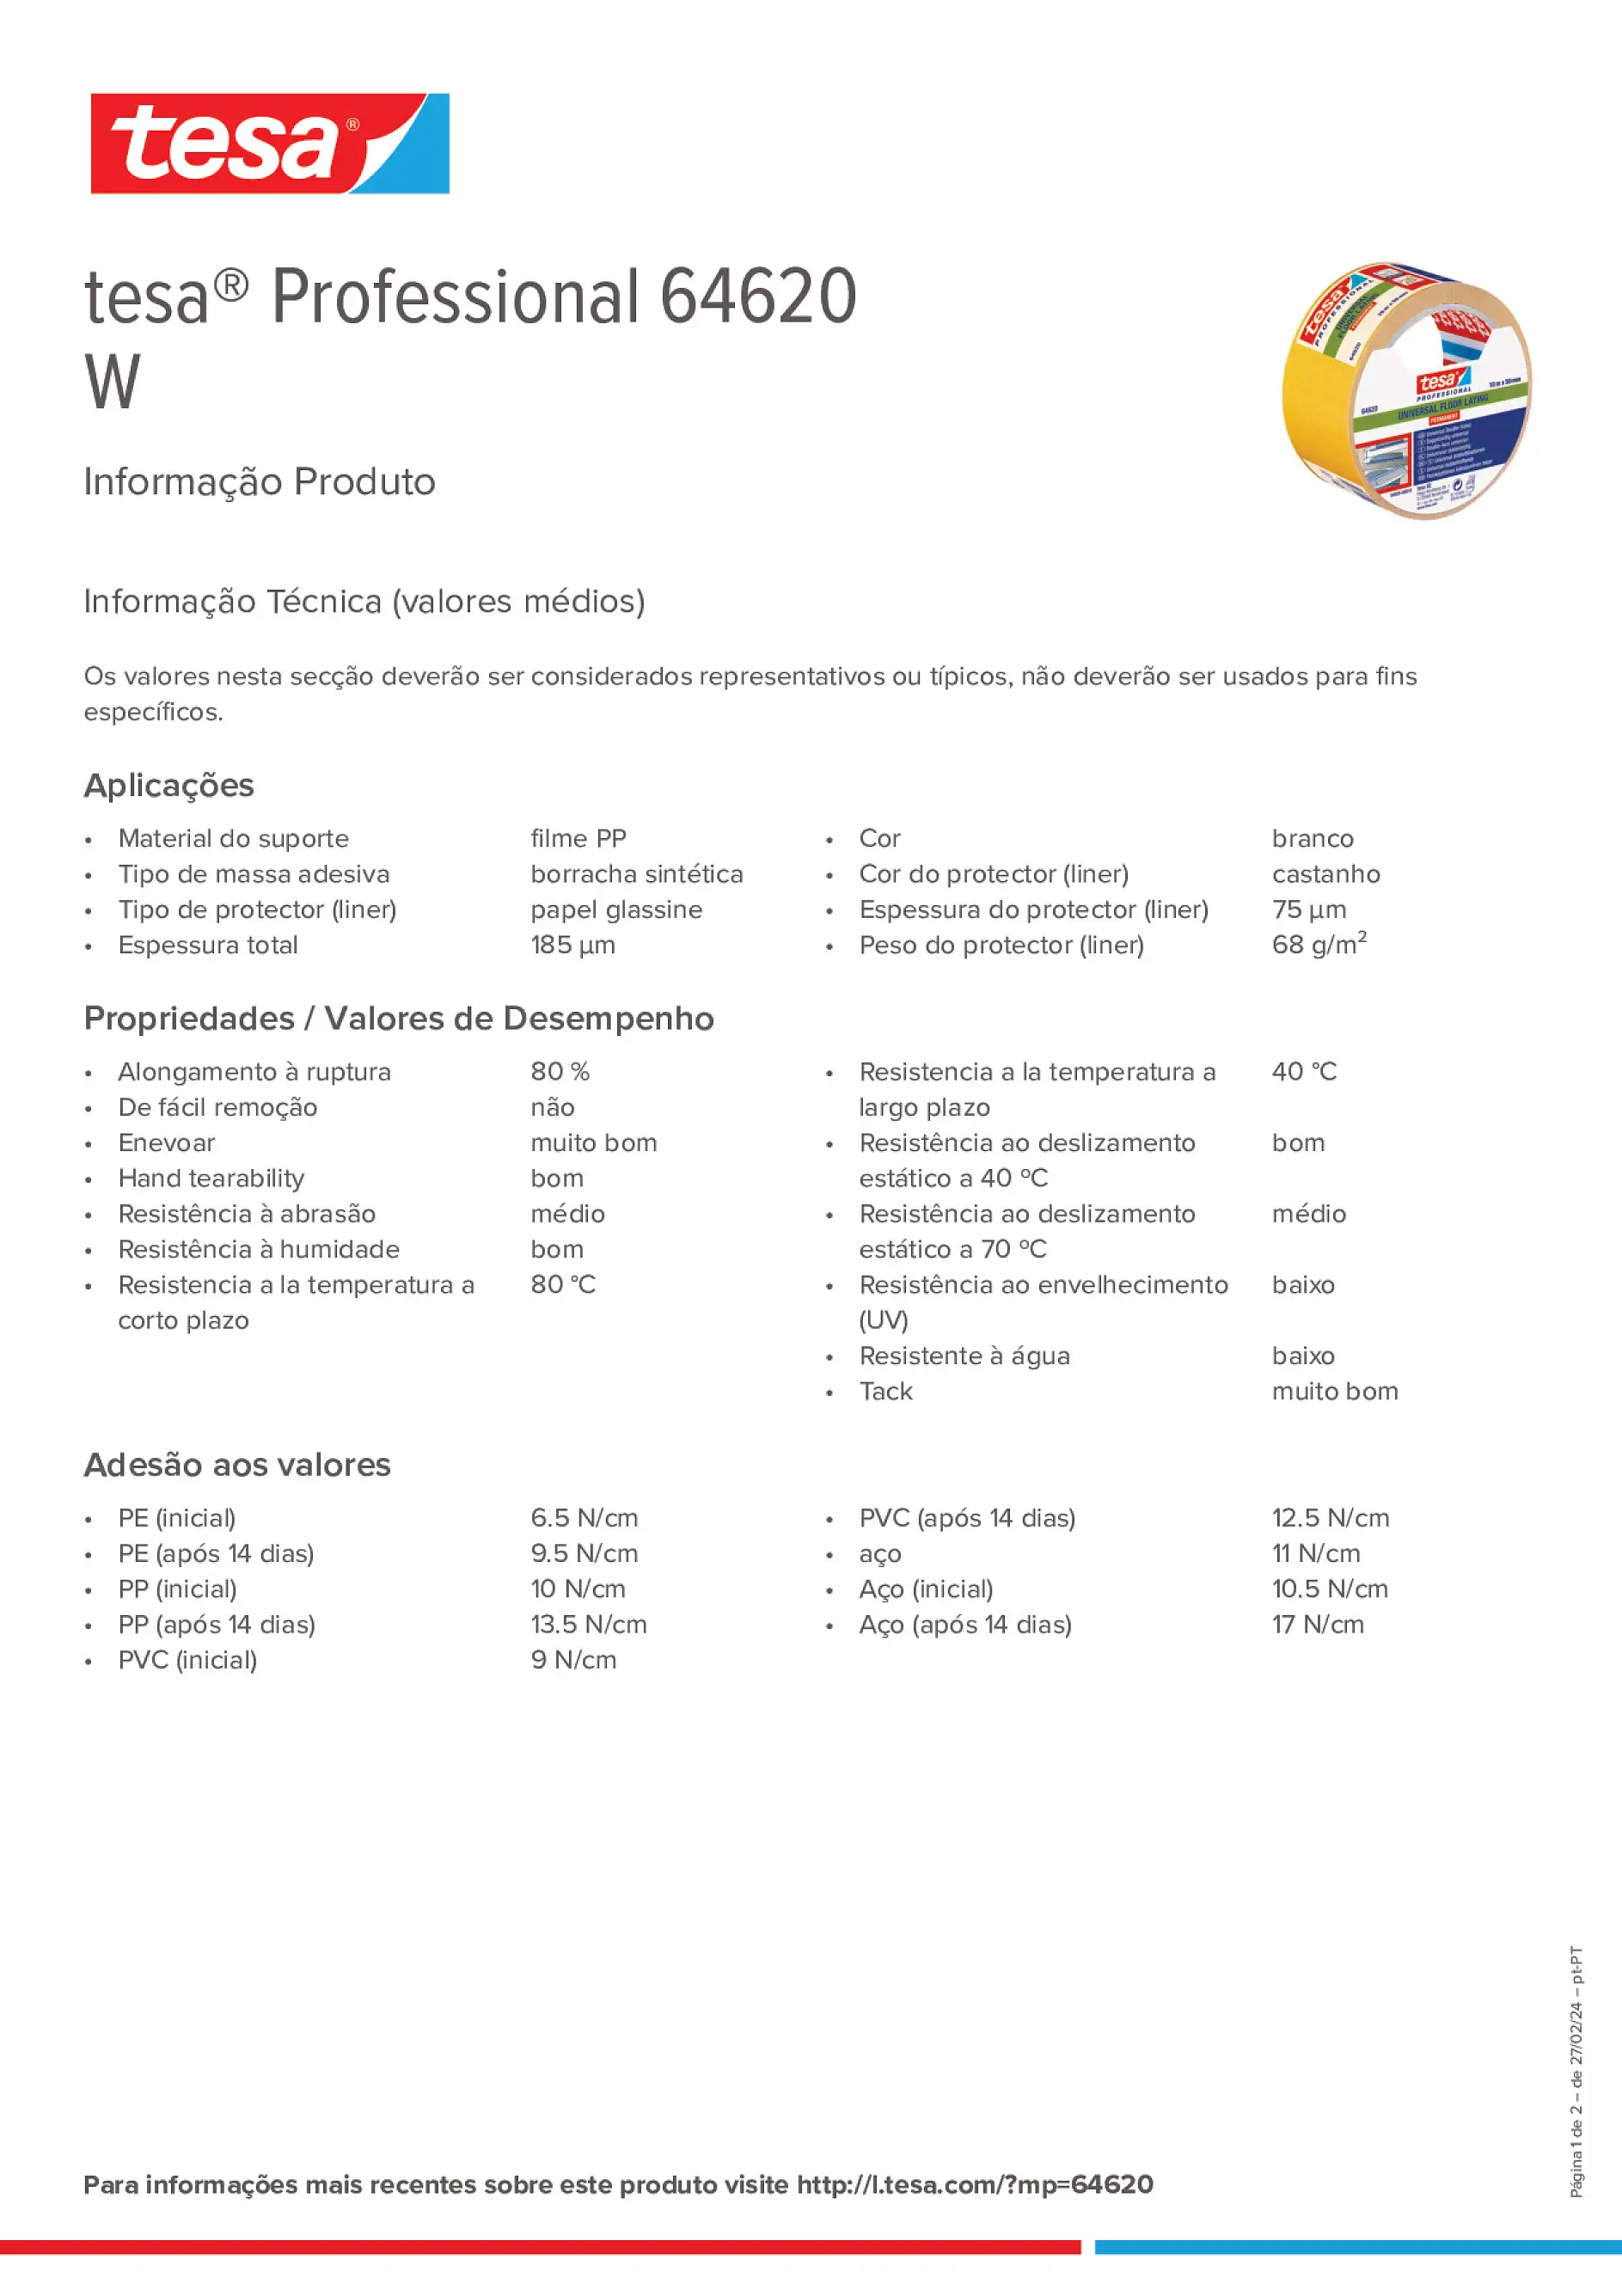 Product information_tesa® Professional 64620_pt-PT